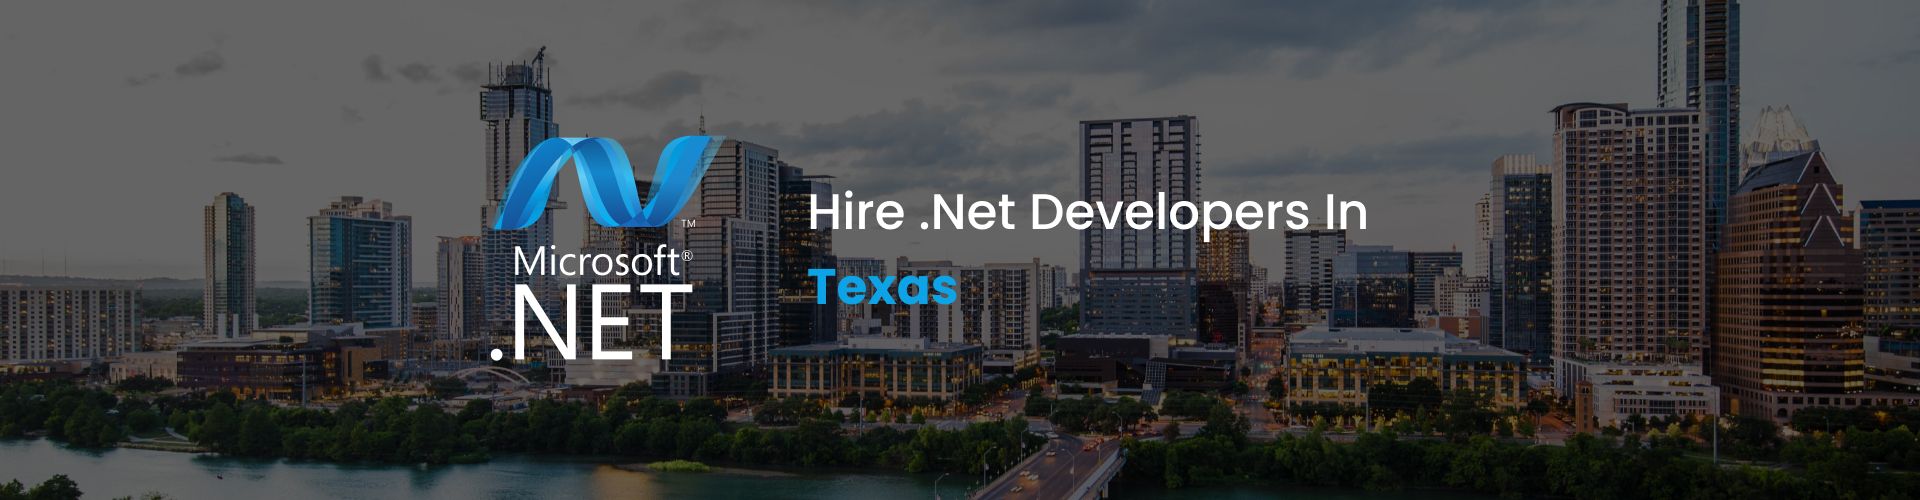 hire dot net developers in texas